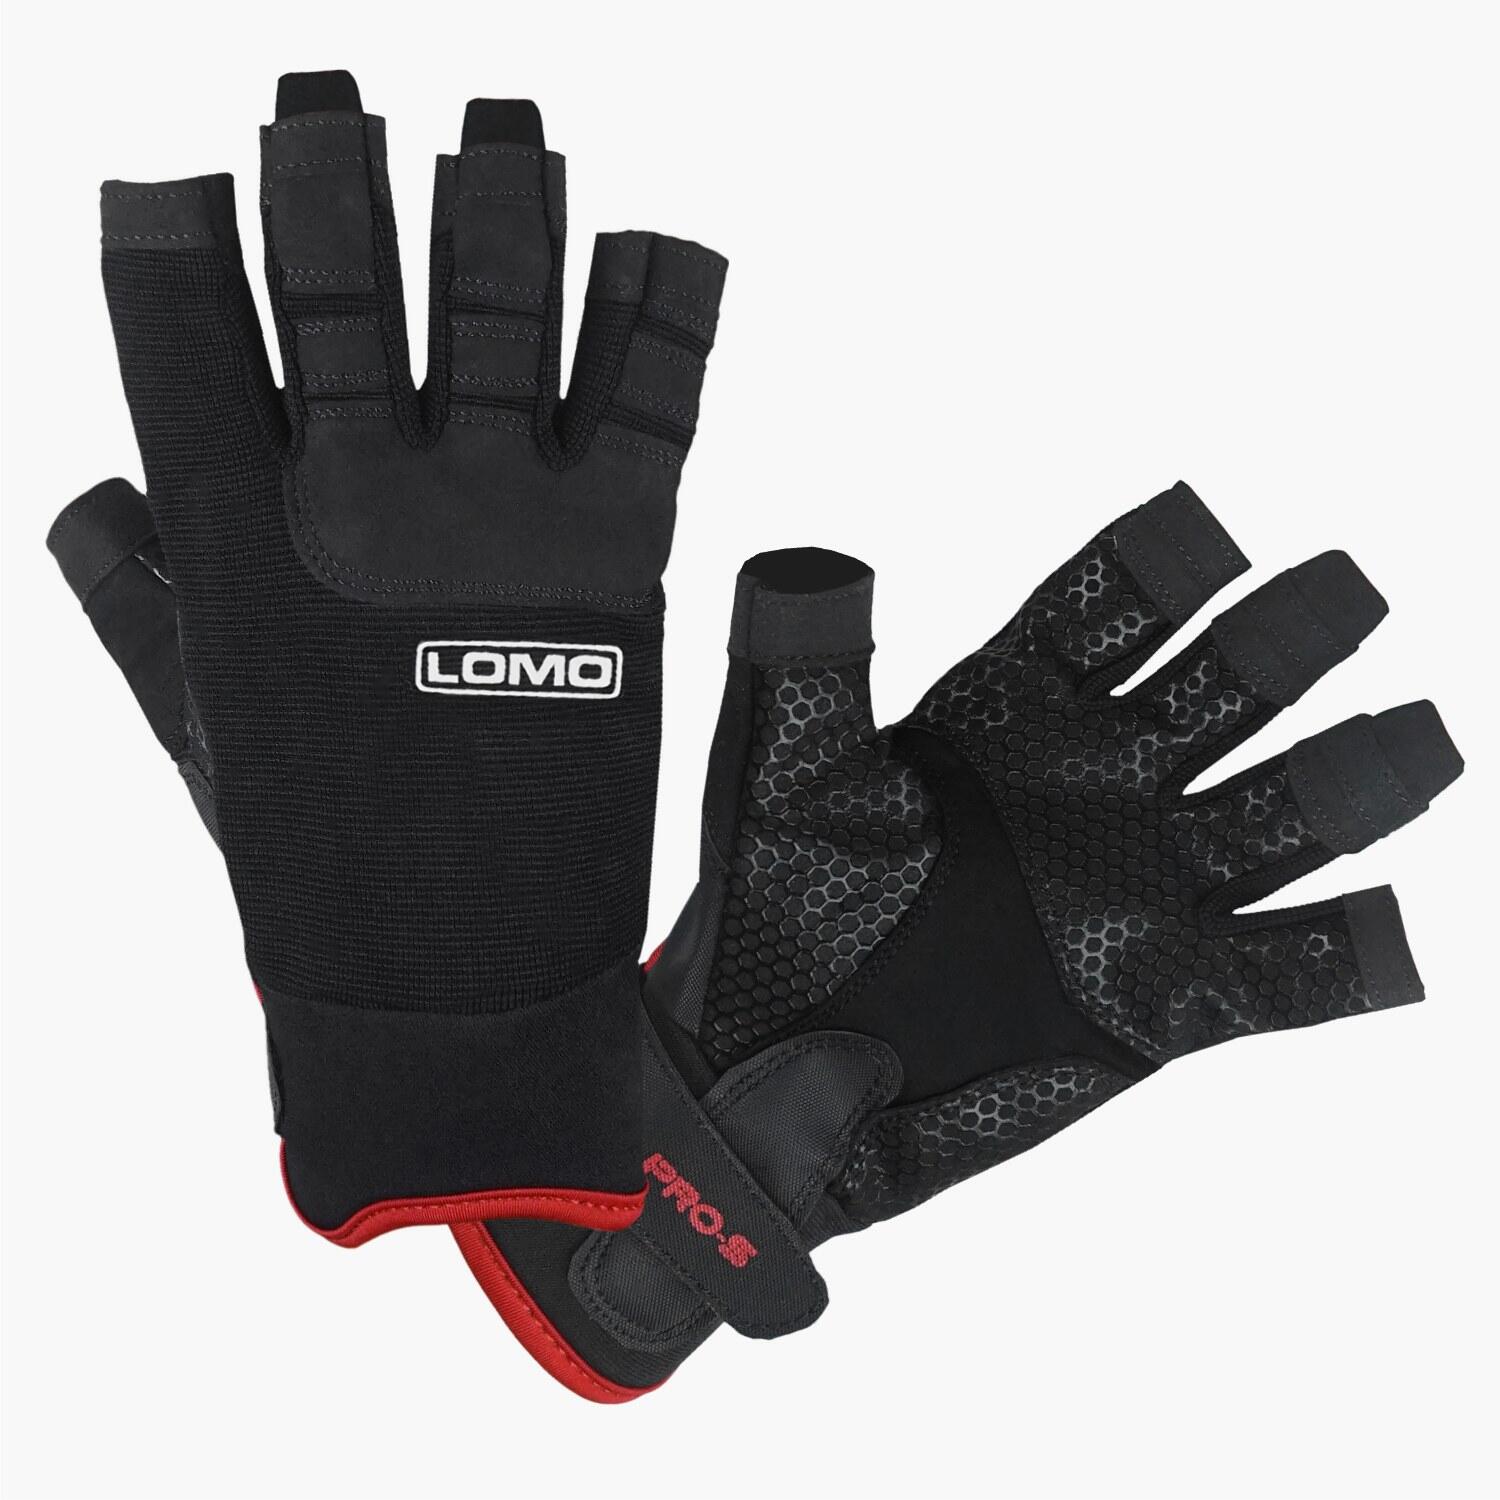 Lomo Sailing Pro-S Gloves - Short Finger 5/8